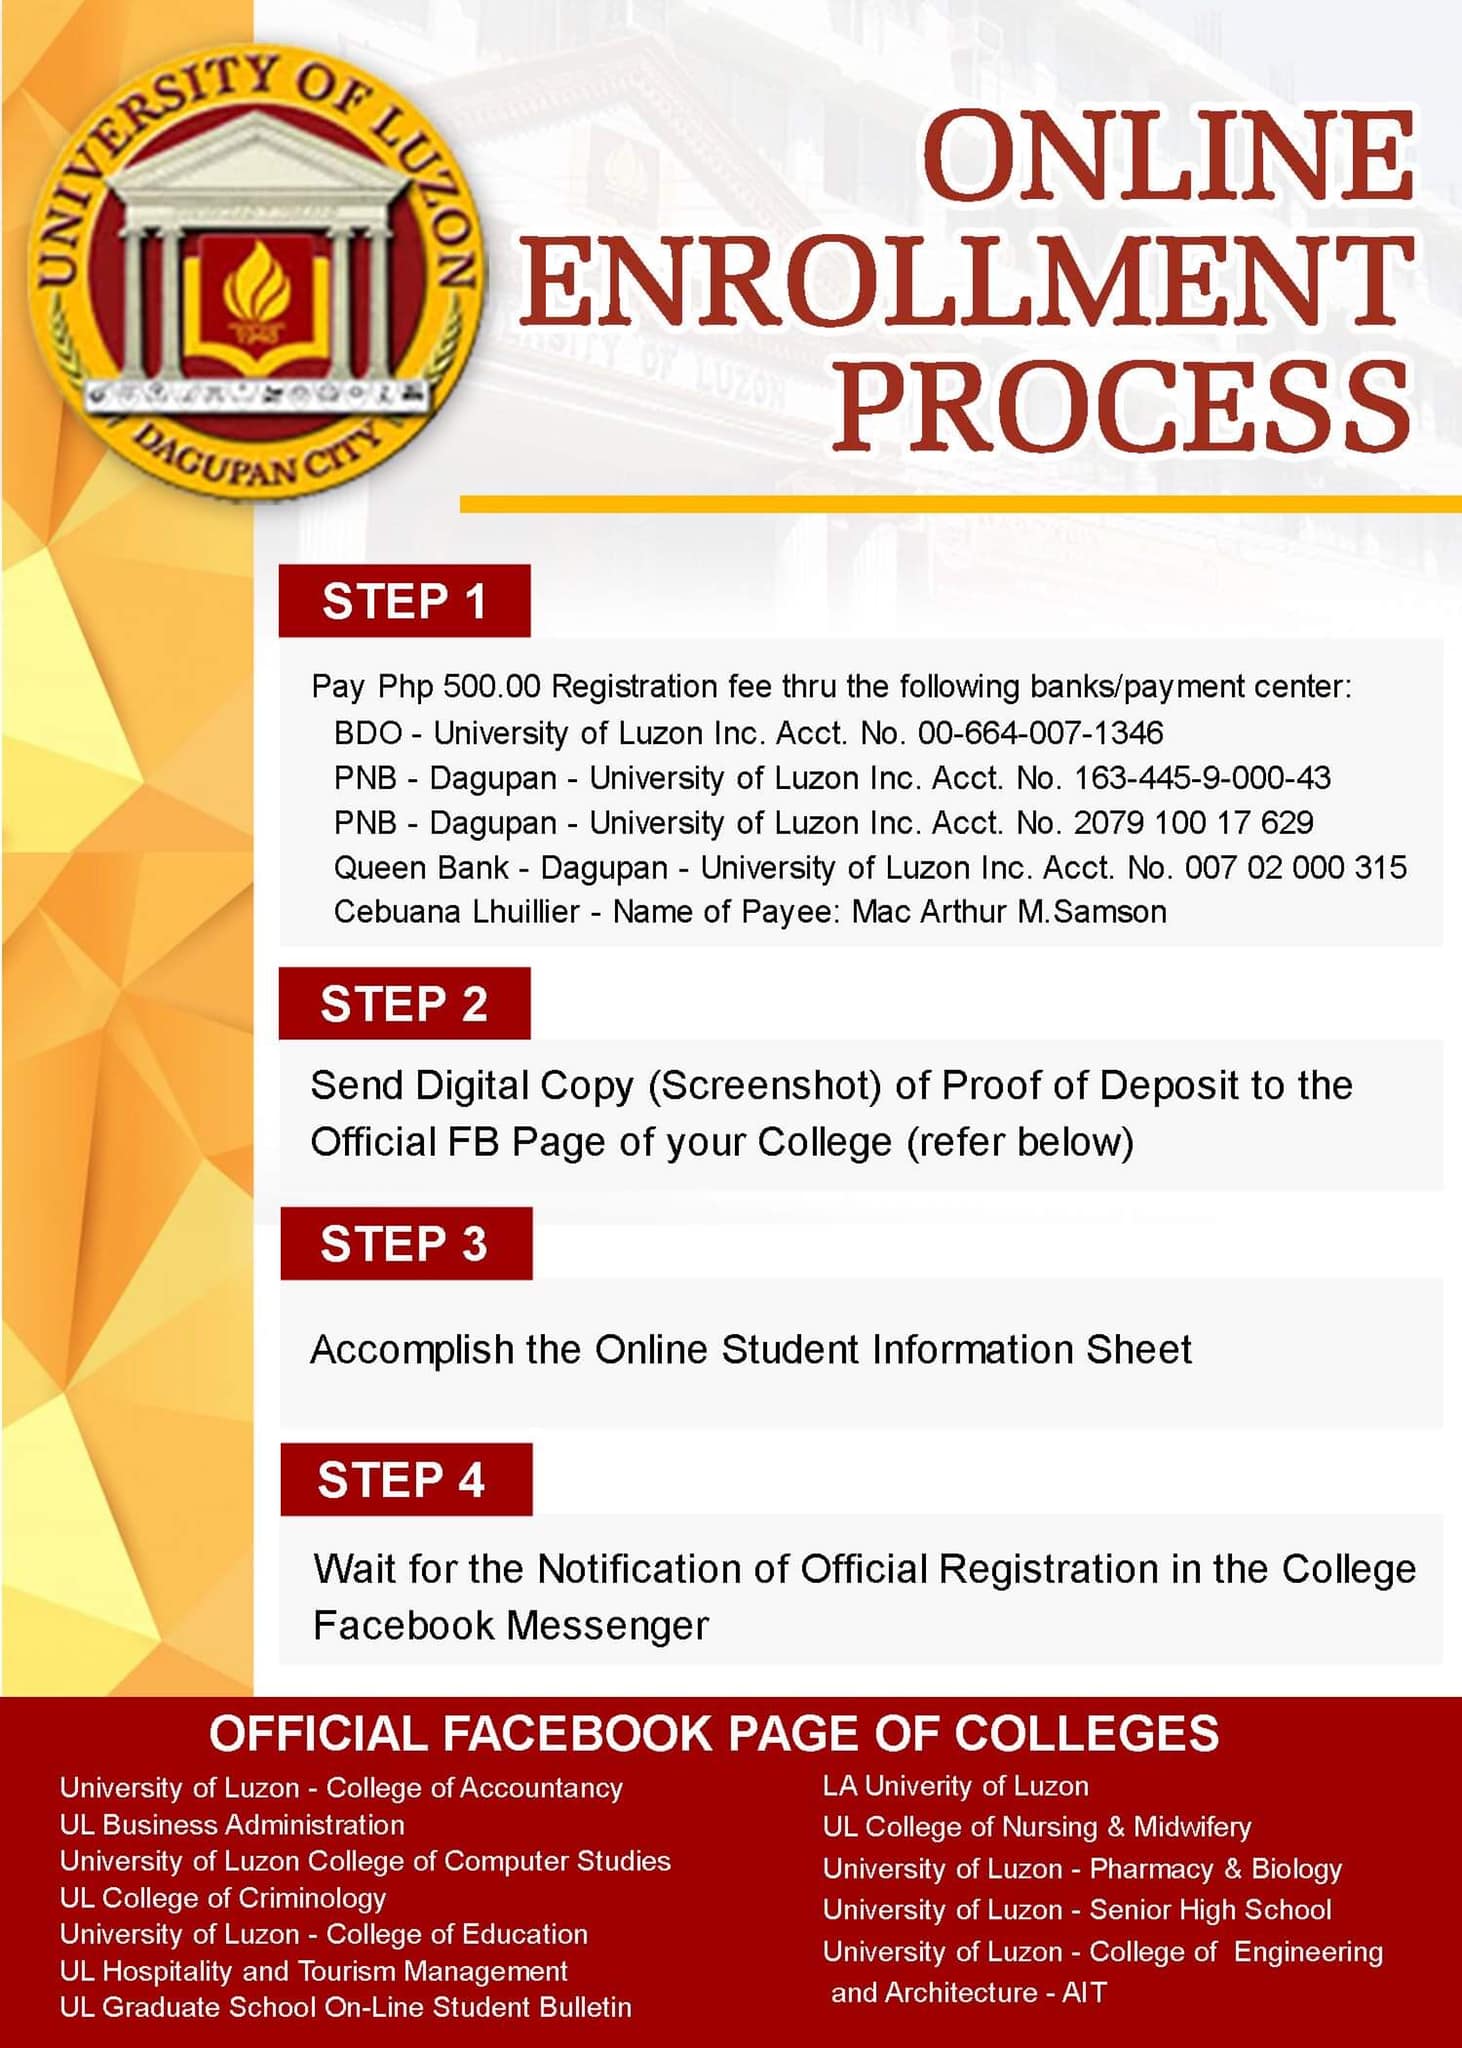 Online enrollment process